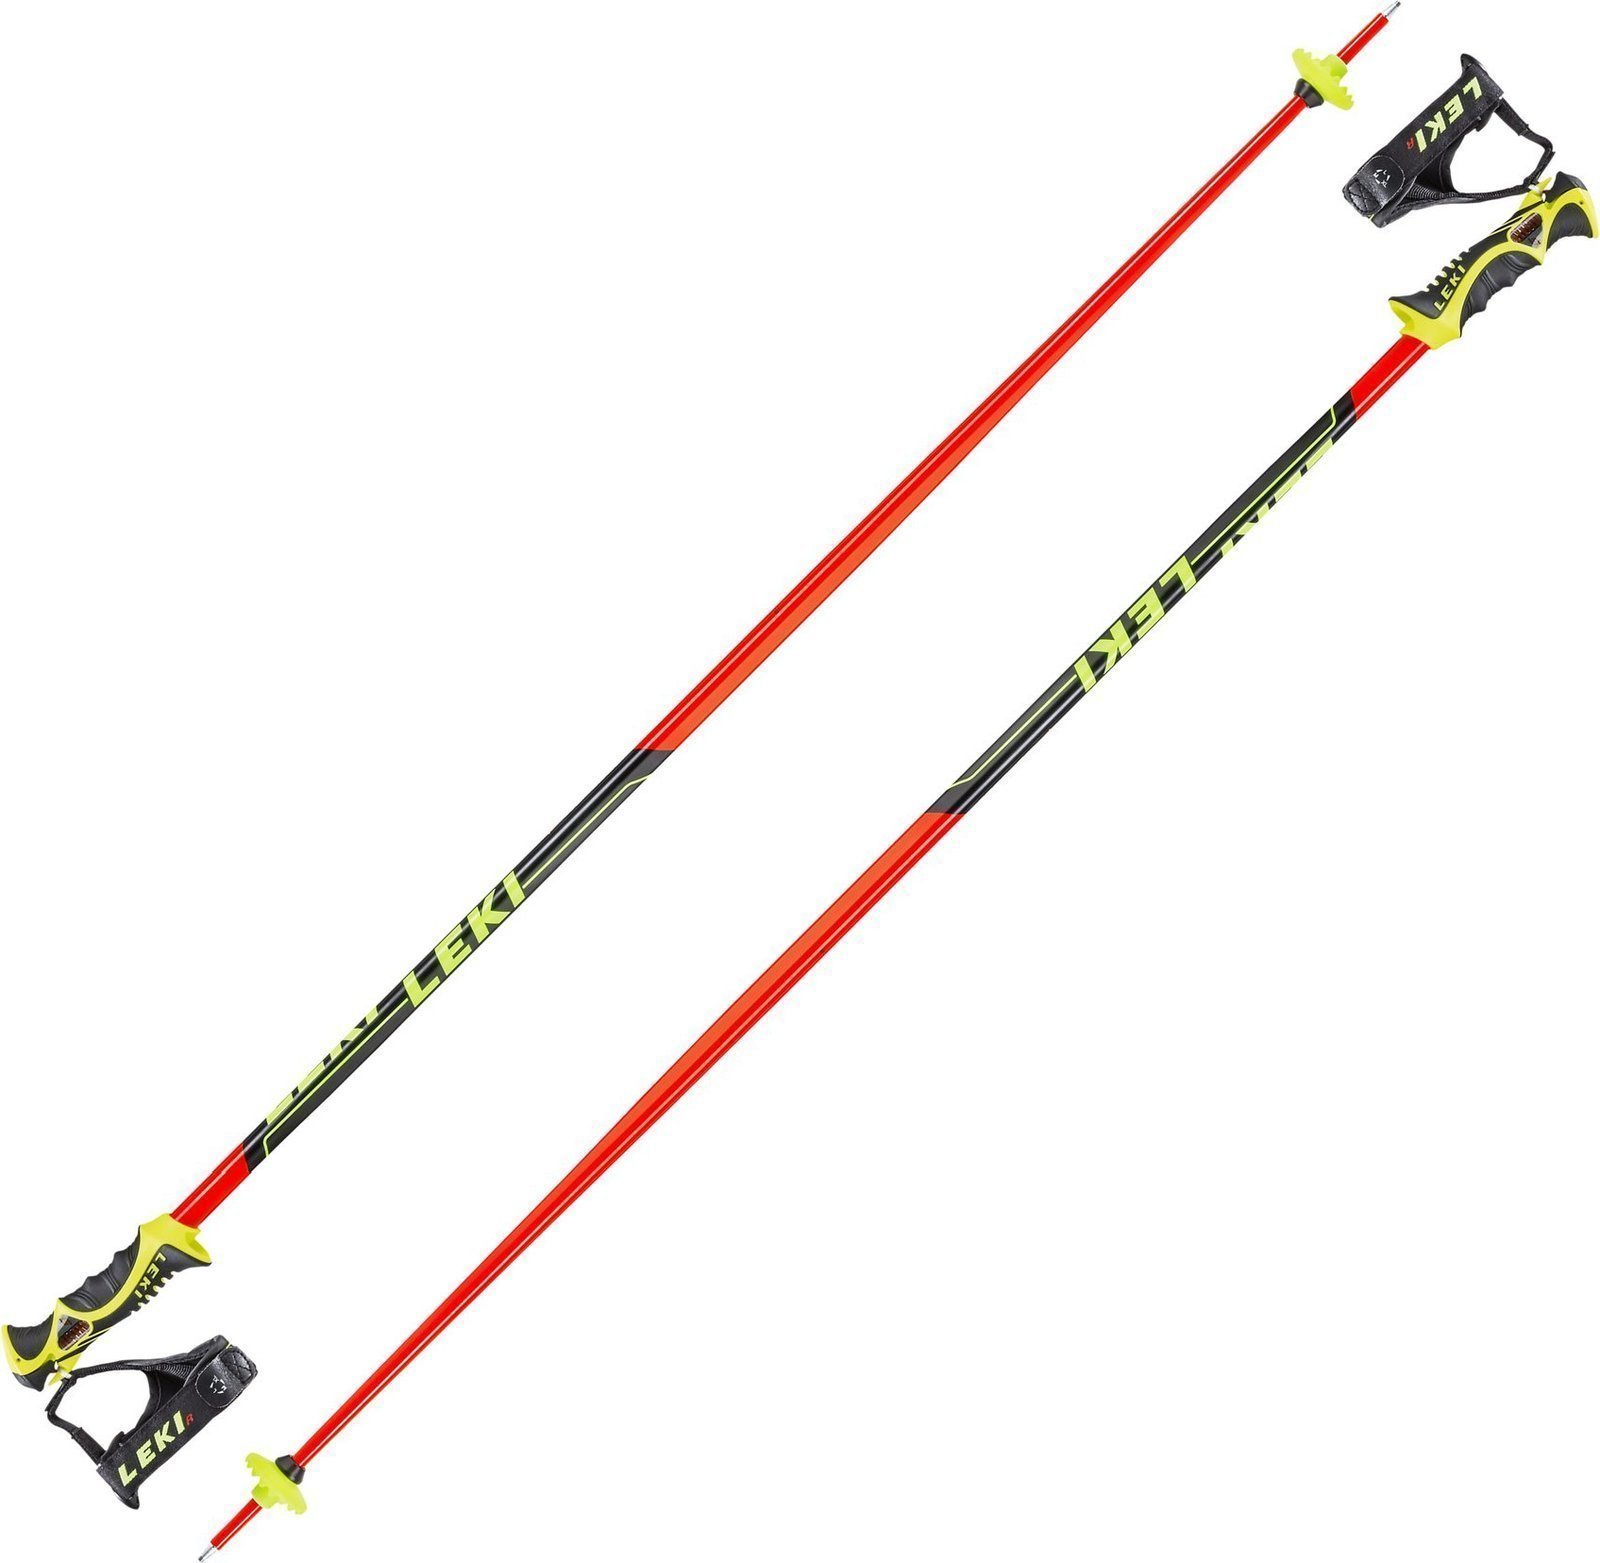 Bâtons de ski Leki Worldcup Racing SL Neonred/Neonyellow-Black-White 120 17/18